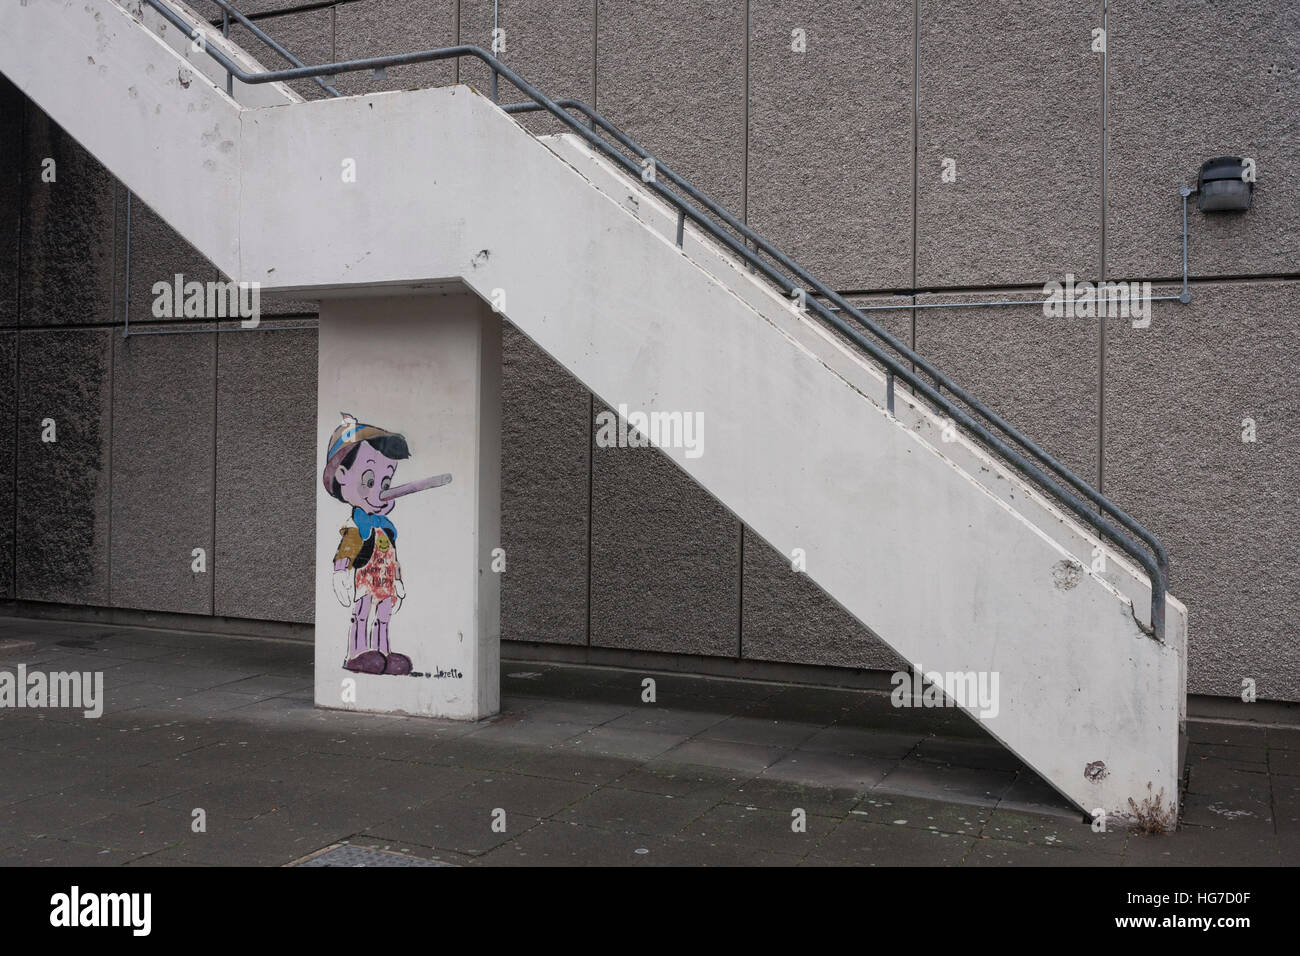 The Disney cartoon character Pinoccio, beneath concrete stairs on the Aylesbury Estate, on 4th January, London borough of Southwark, England. Stock Photo